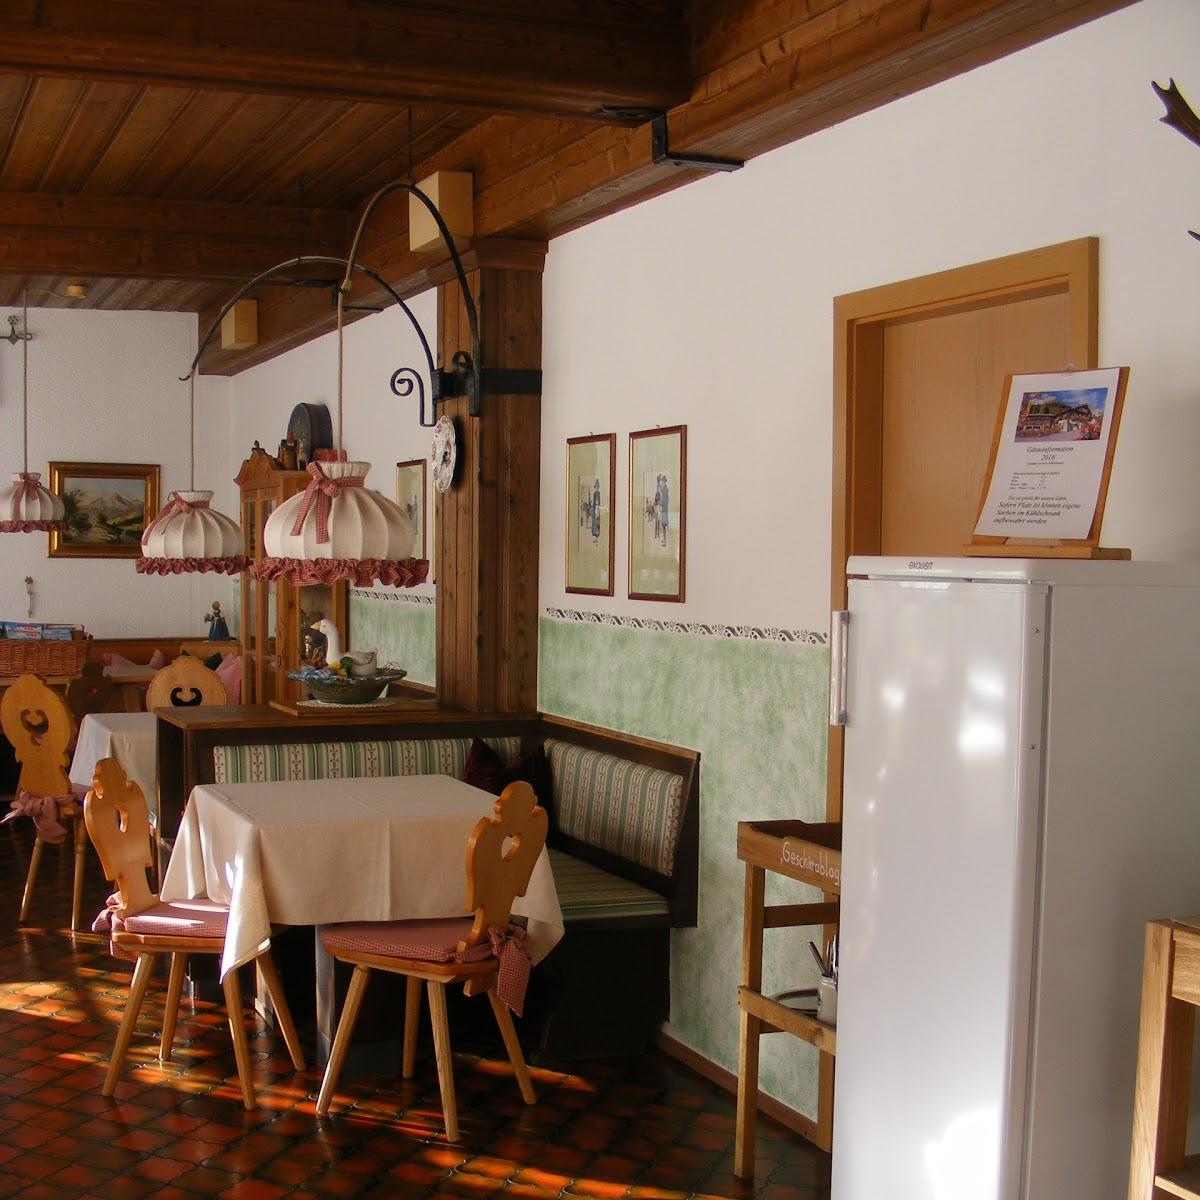 Restaurant "Gasthof-Pension Wimbachklamm" in Ramsau bei Berchtesgaden